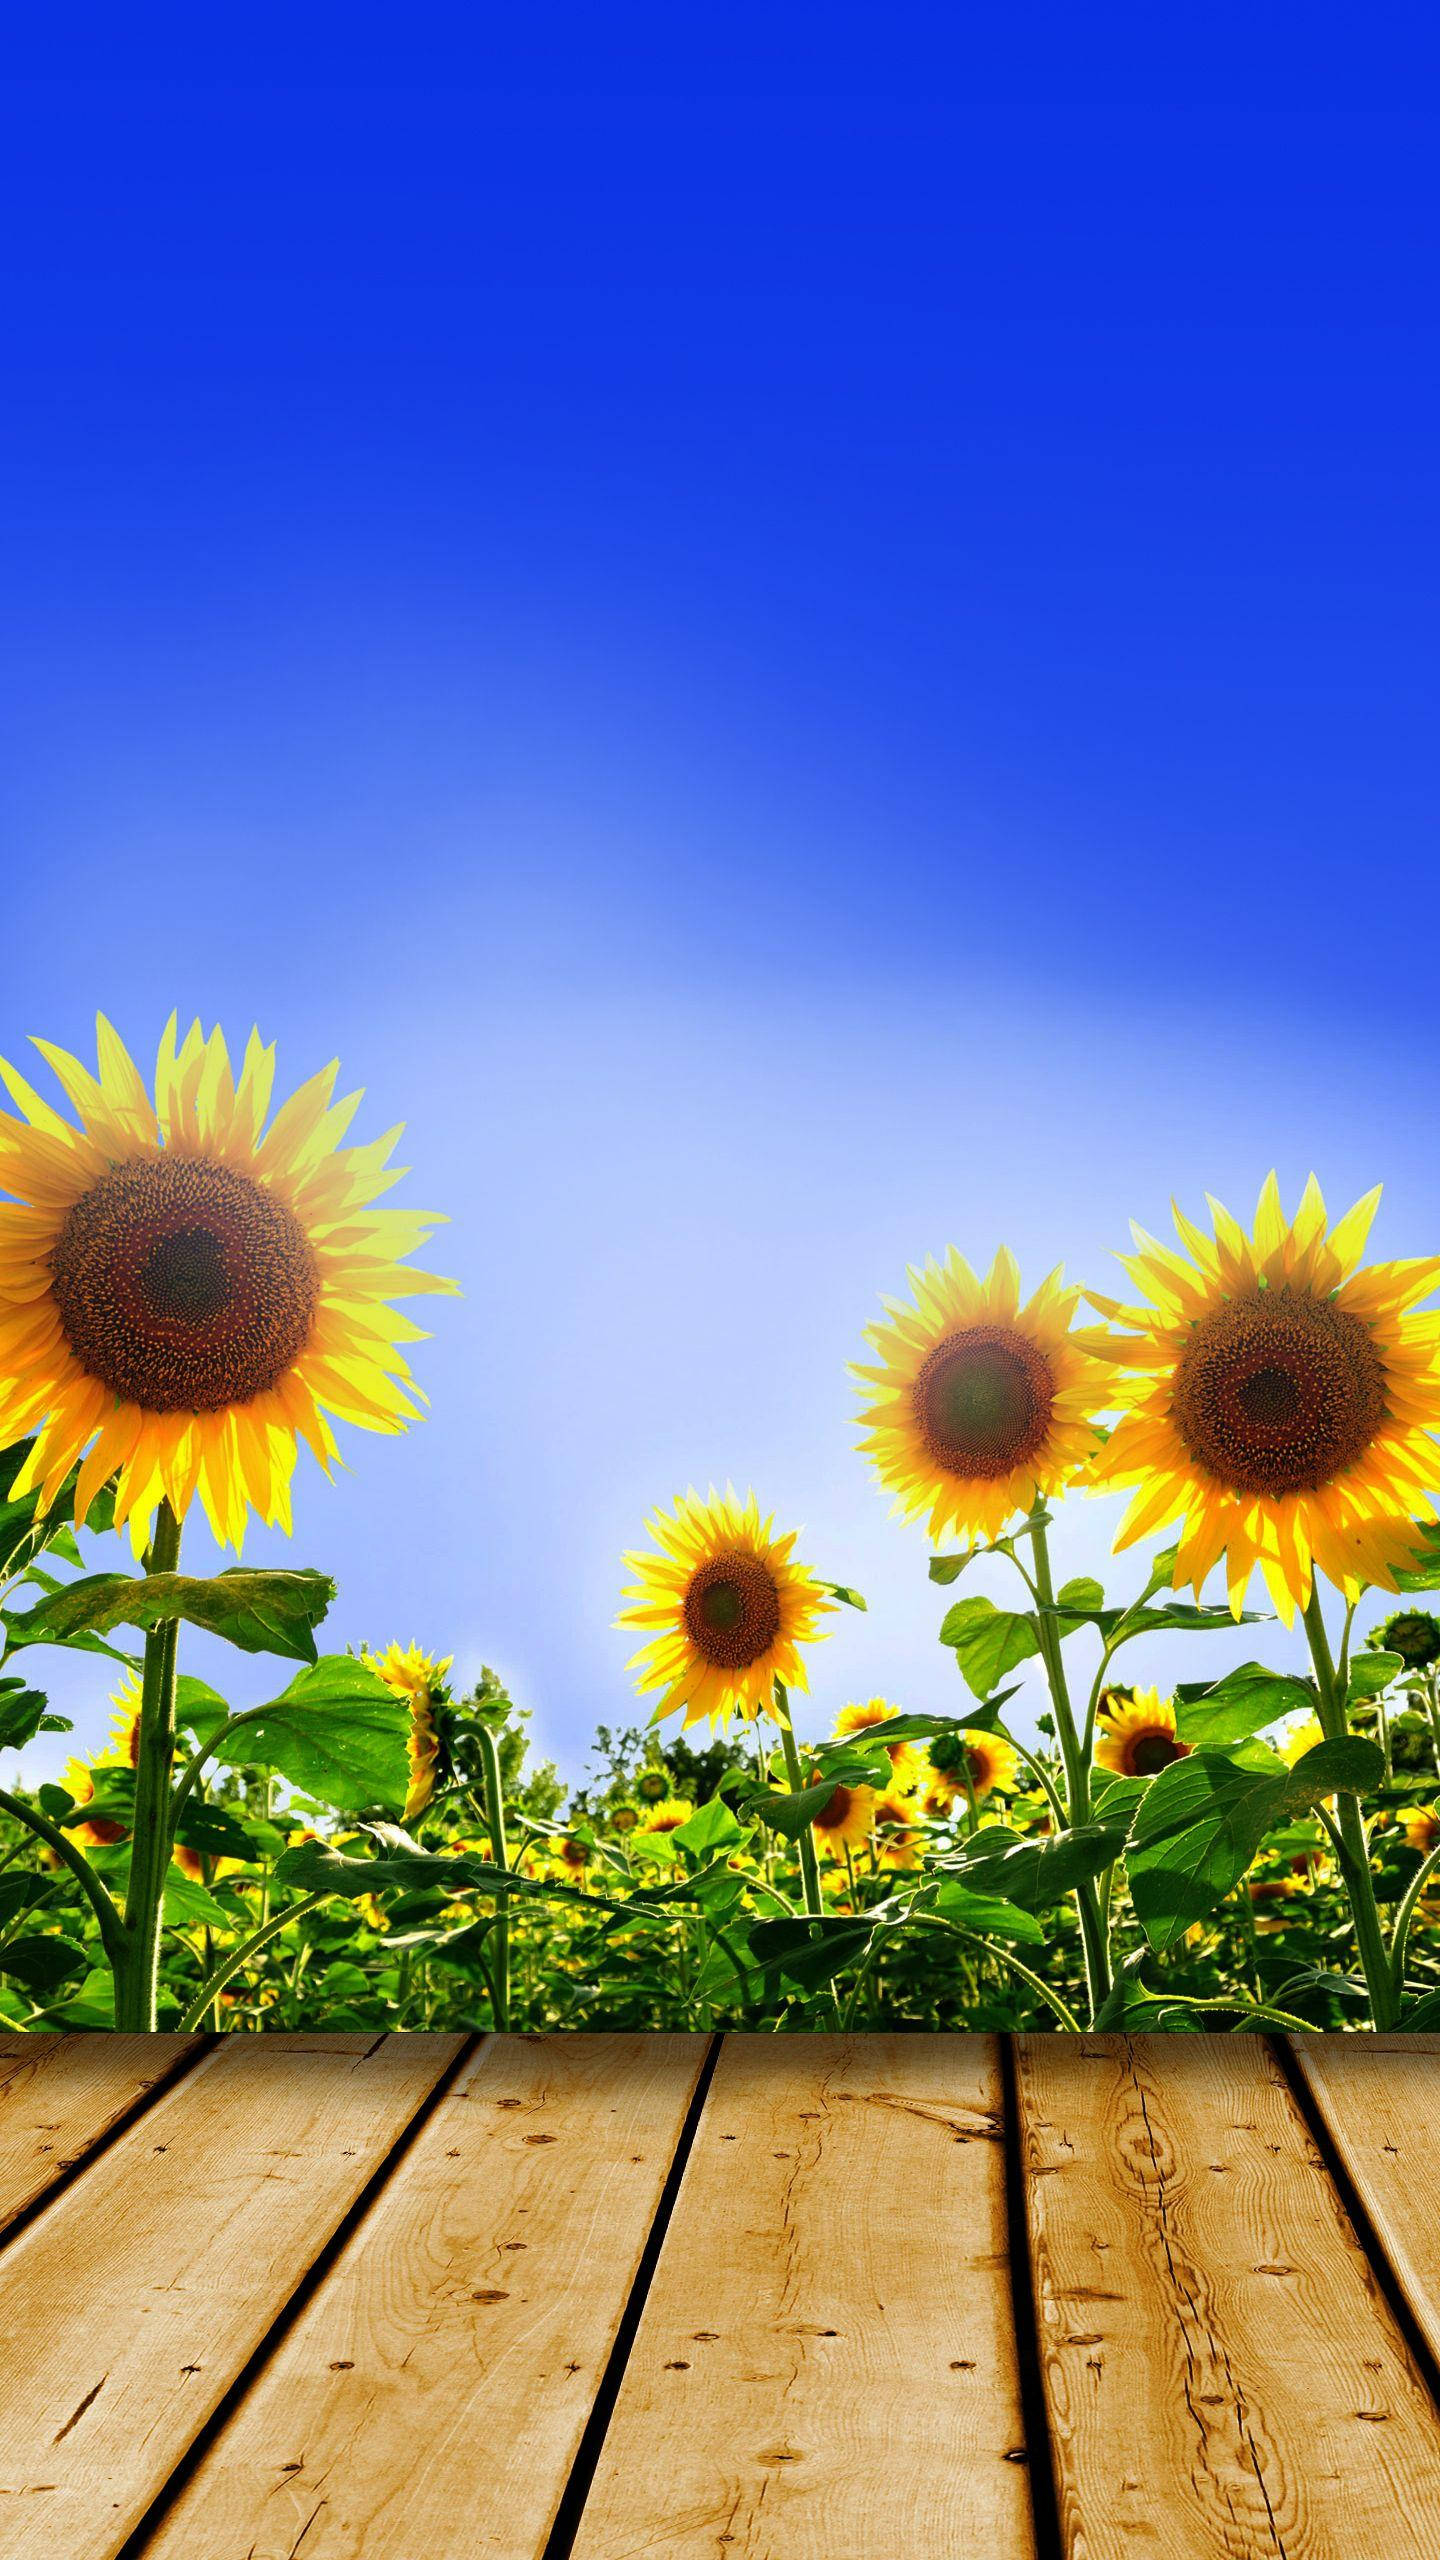 Download Samsung Galaxy S7 Edge Sunflowers Wallpaper 